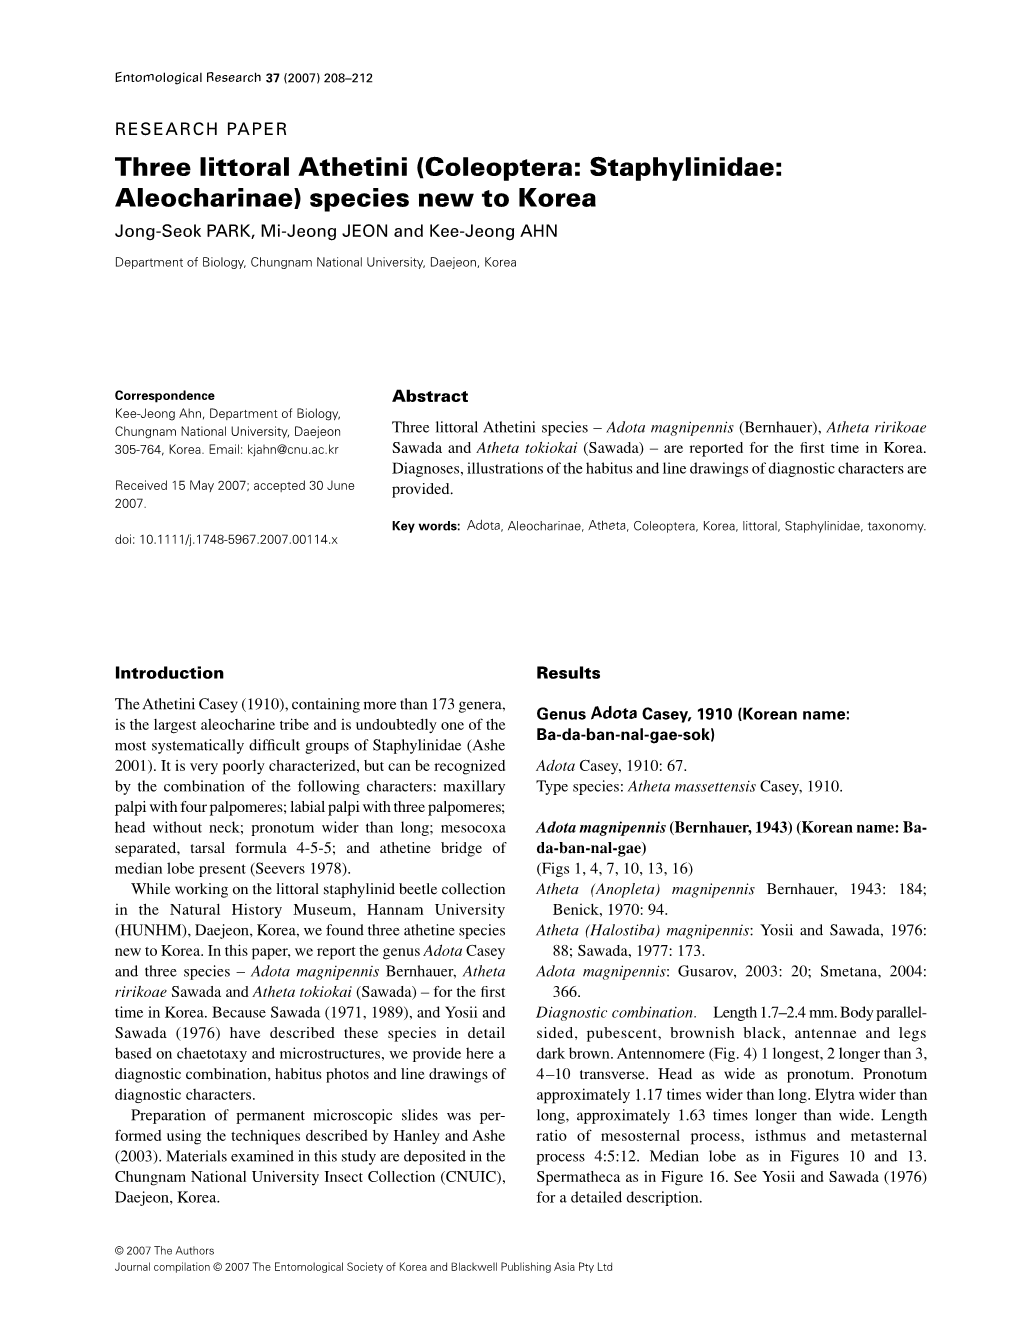 Three Littoral Athetini (Coleoptera: Staphylinidae: Aleocharinae) Species New to Korea Jong-Seok PARK, Mi-Jeong JEON and Kee-Jeong AHN